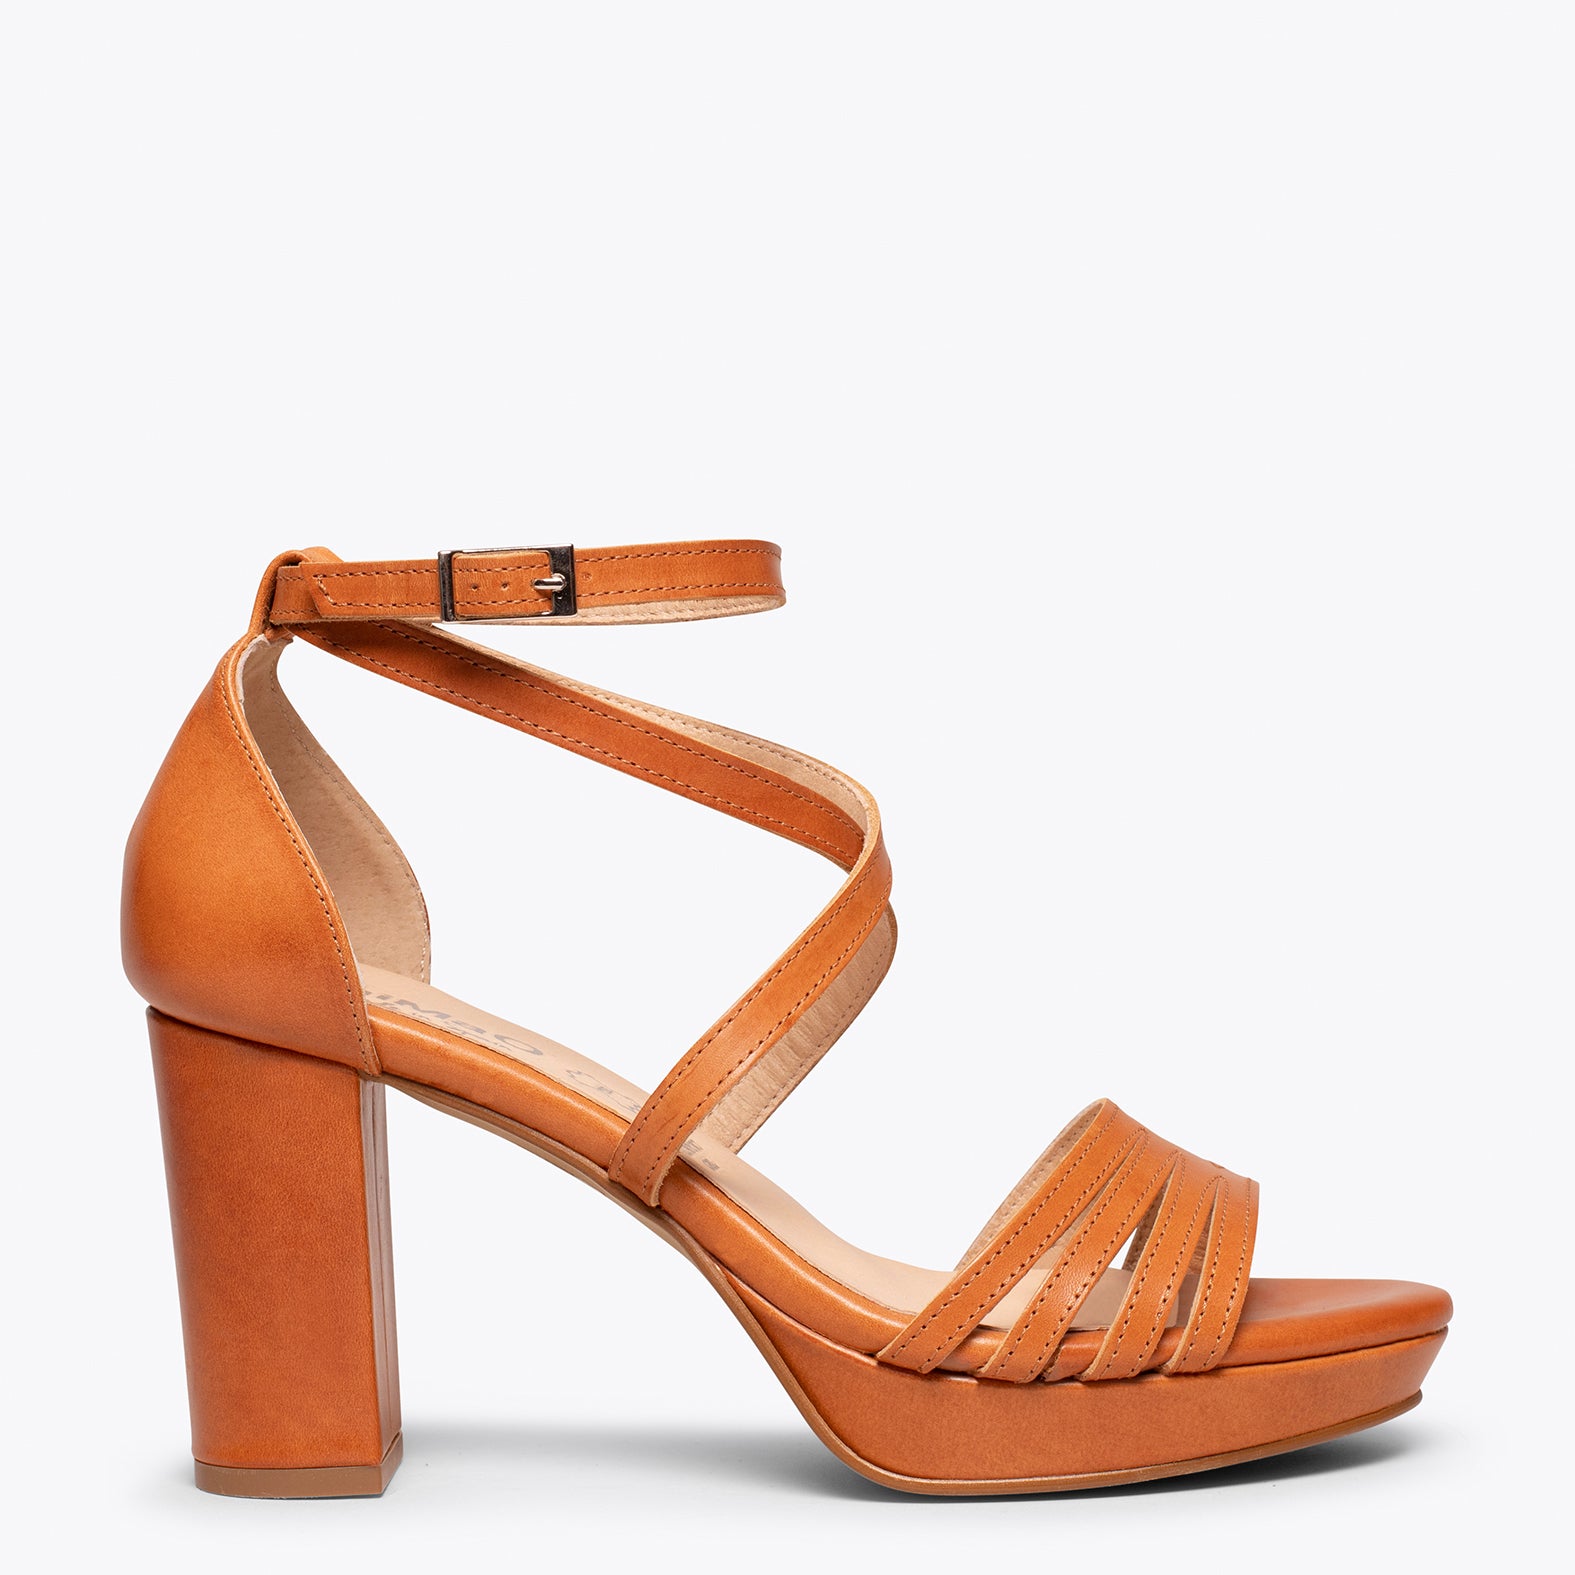 SUNNY – CAMEL nappa leather block heel sandal